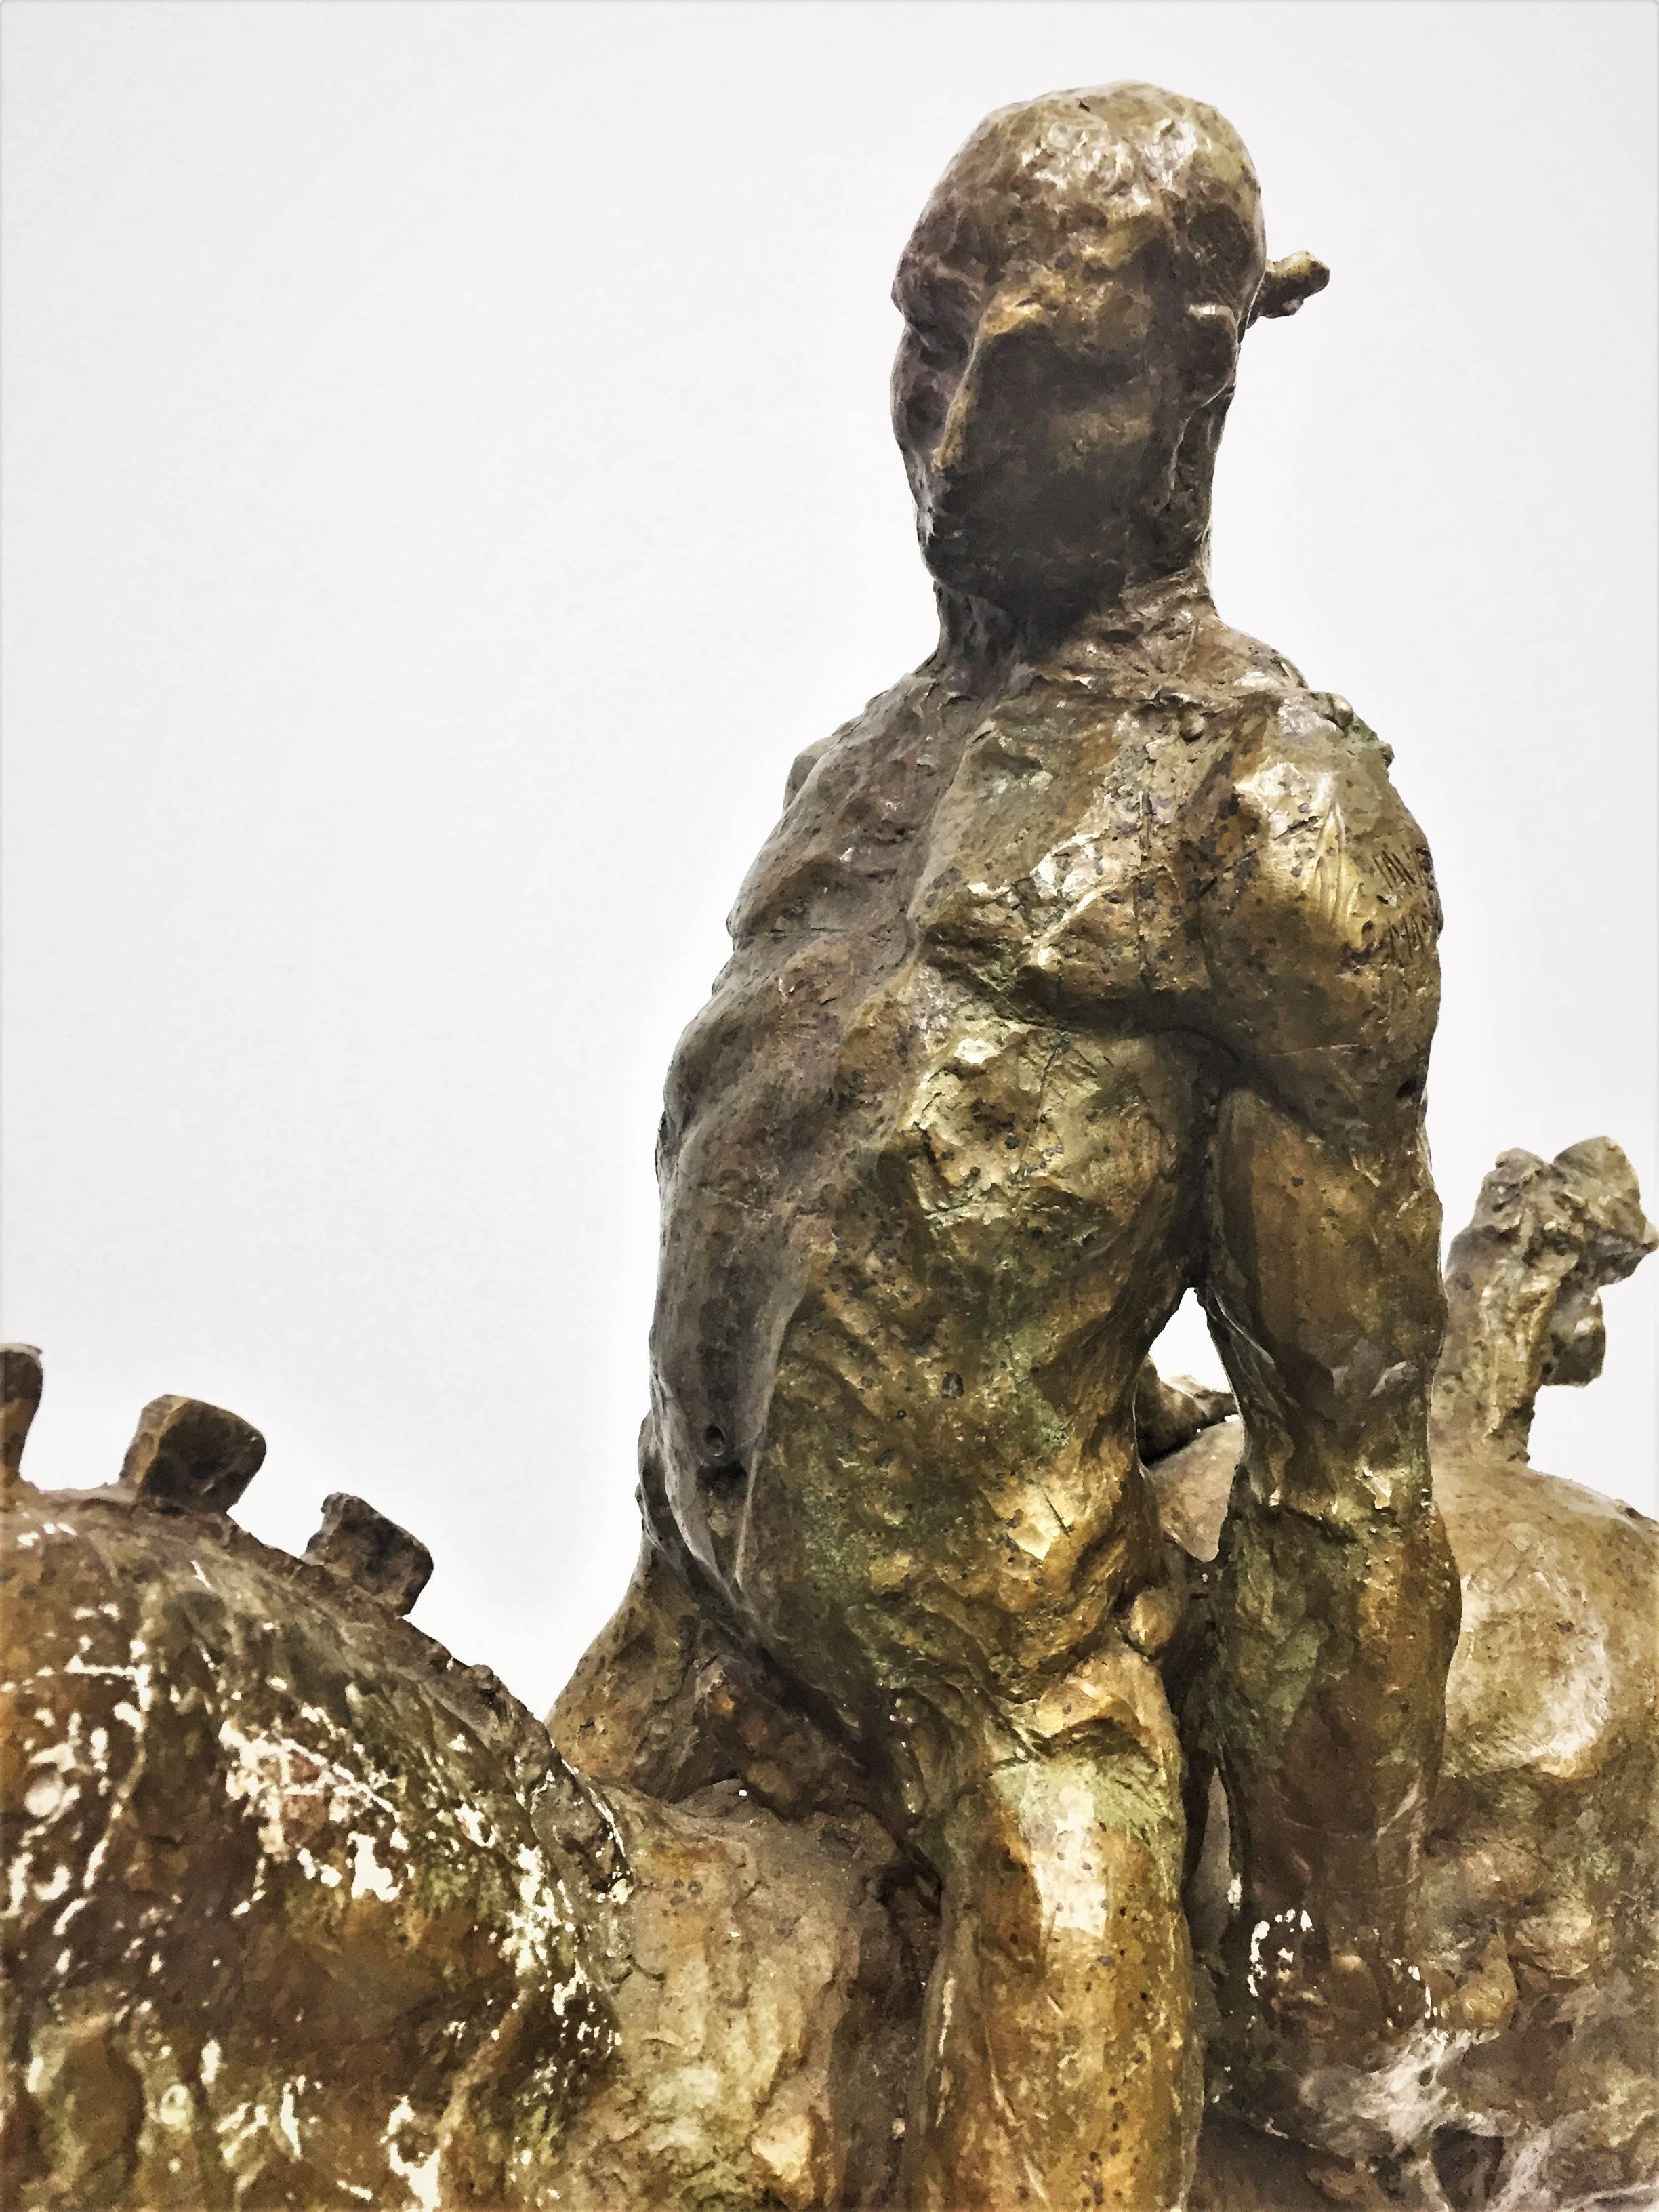 Mid-20th Century Javier Marín, Hombre a Caballo, Contemporary Mexican Bronze Sculpture, ca. 1998